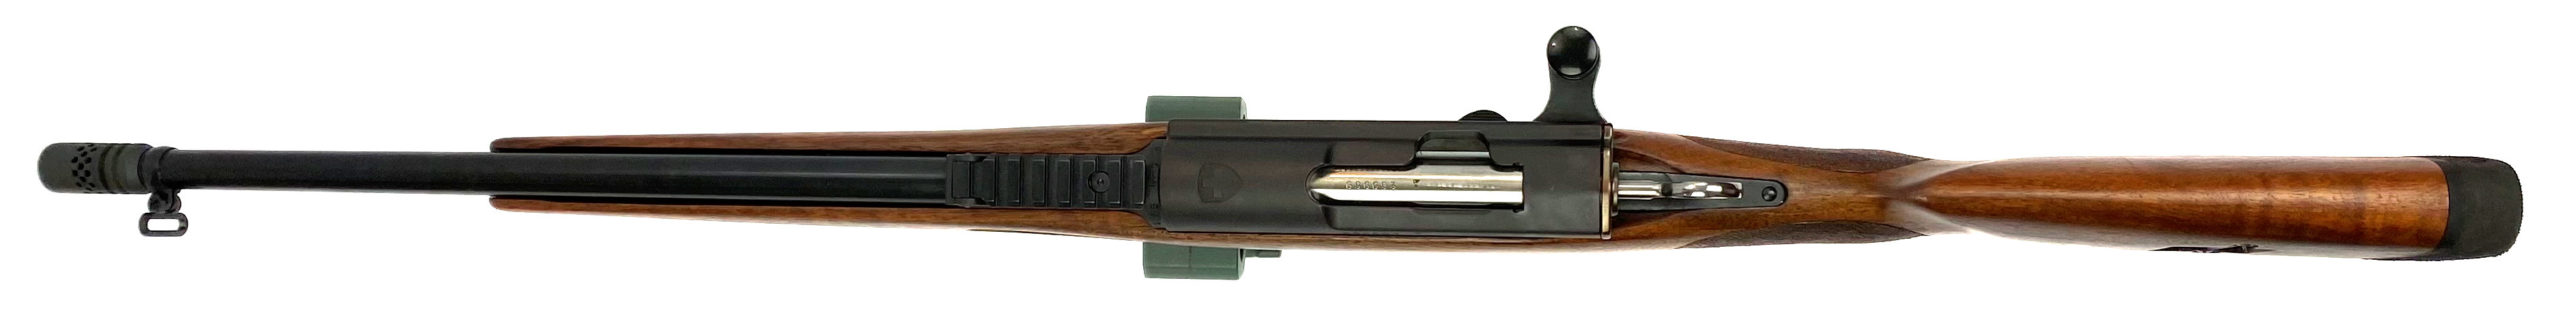 K31 DRUCKJAGD calibre 7.5x55 GP11 Schmidt Rubin